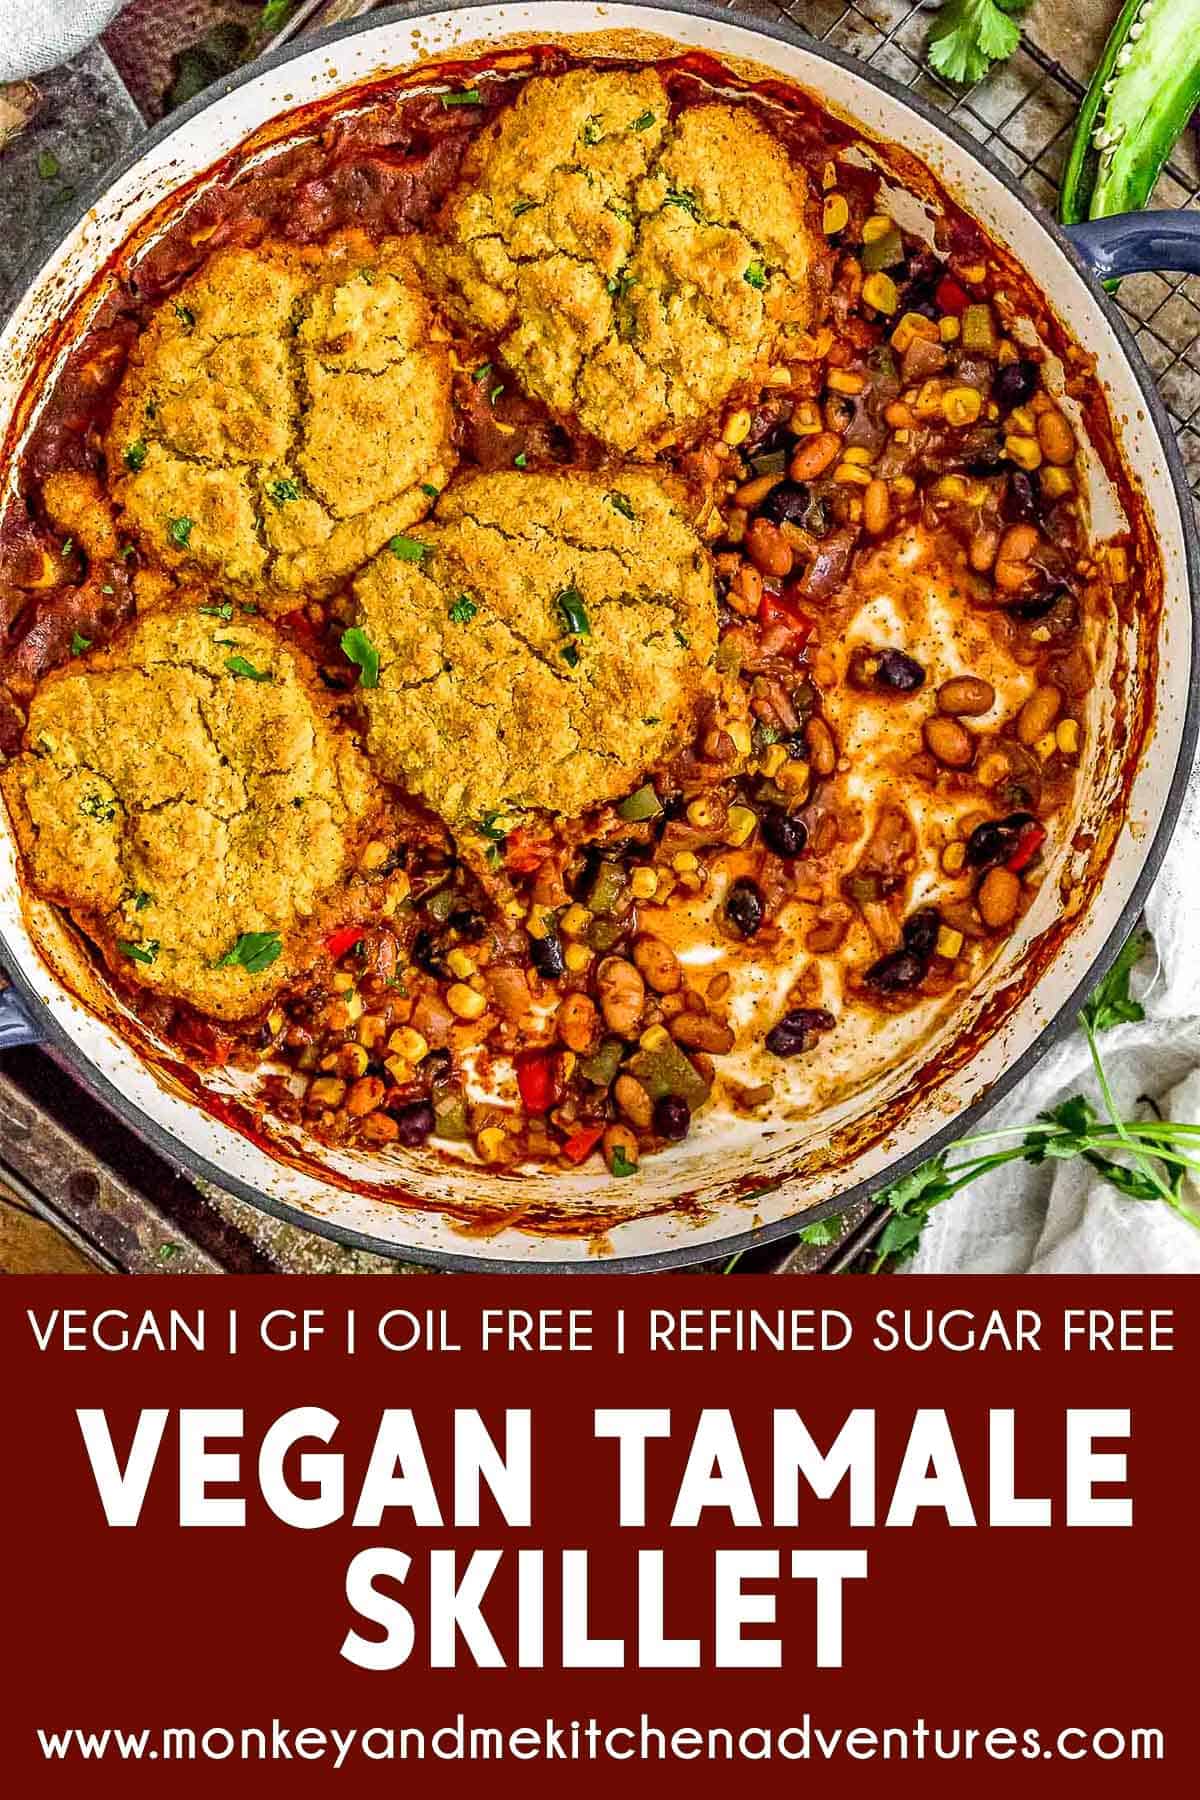 Vegan Tamale Skillet with text description